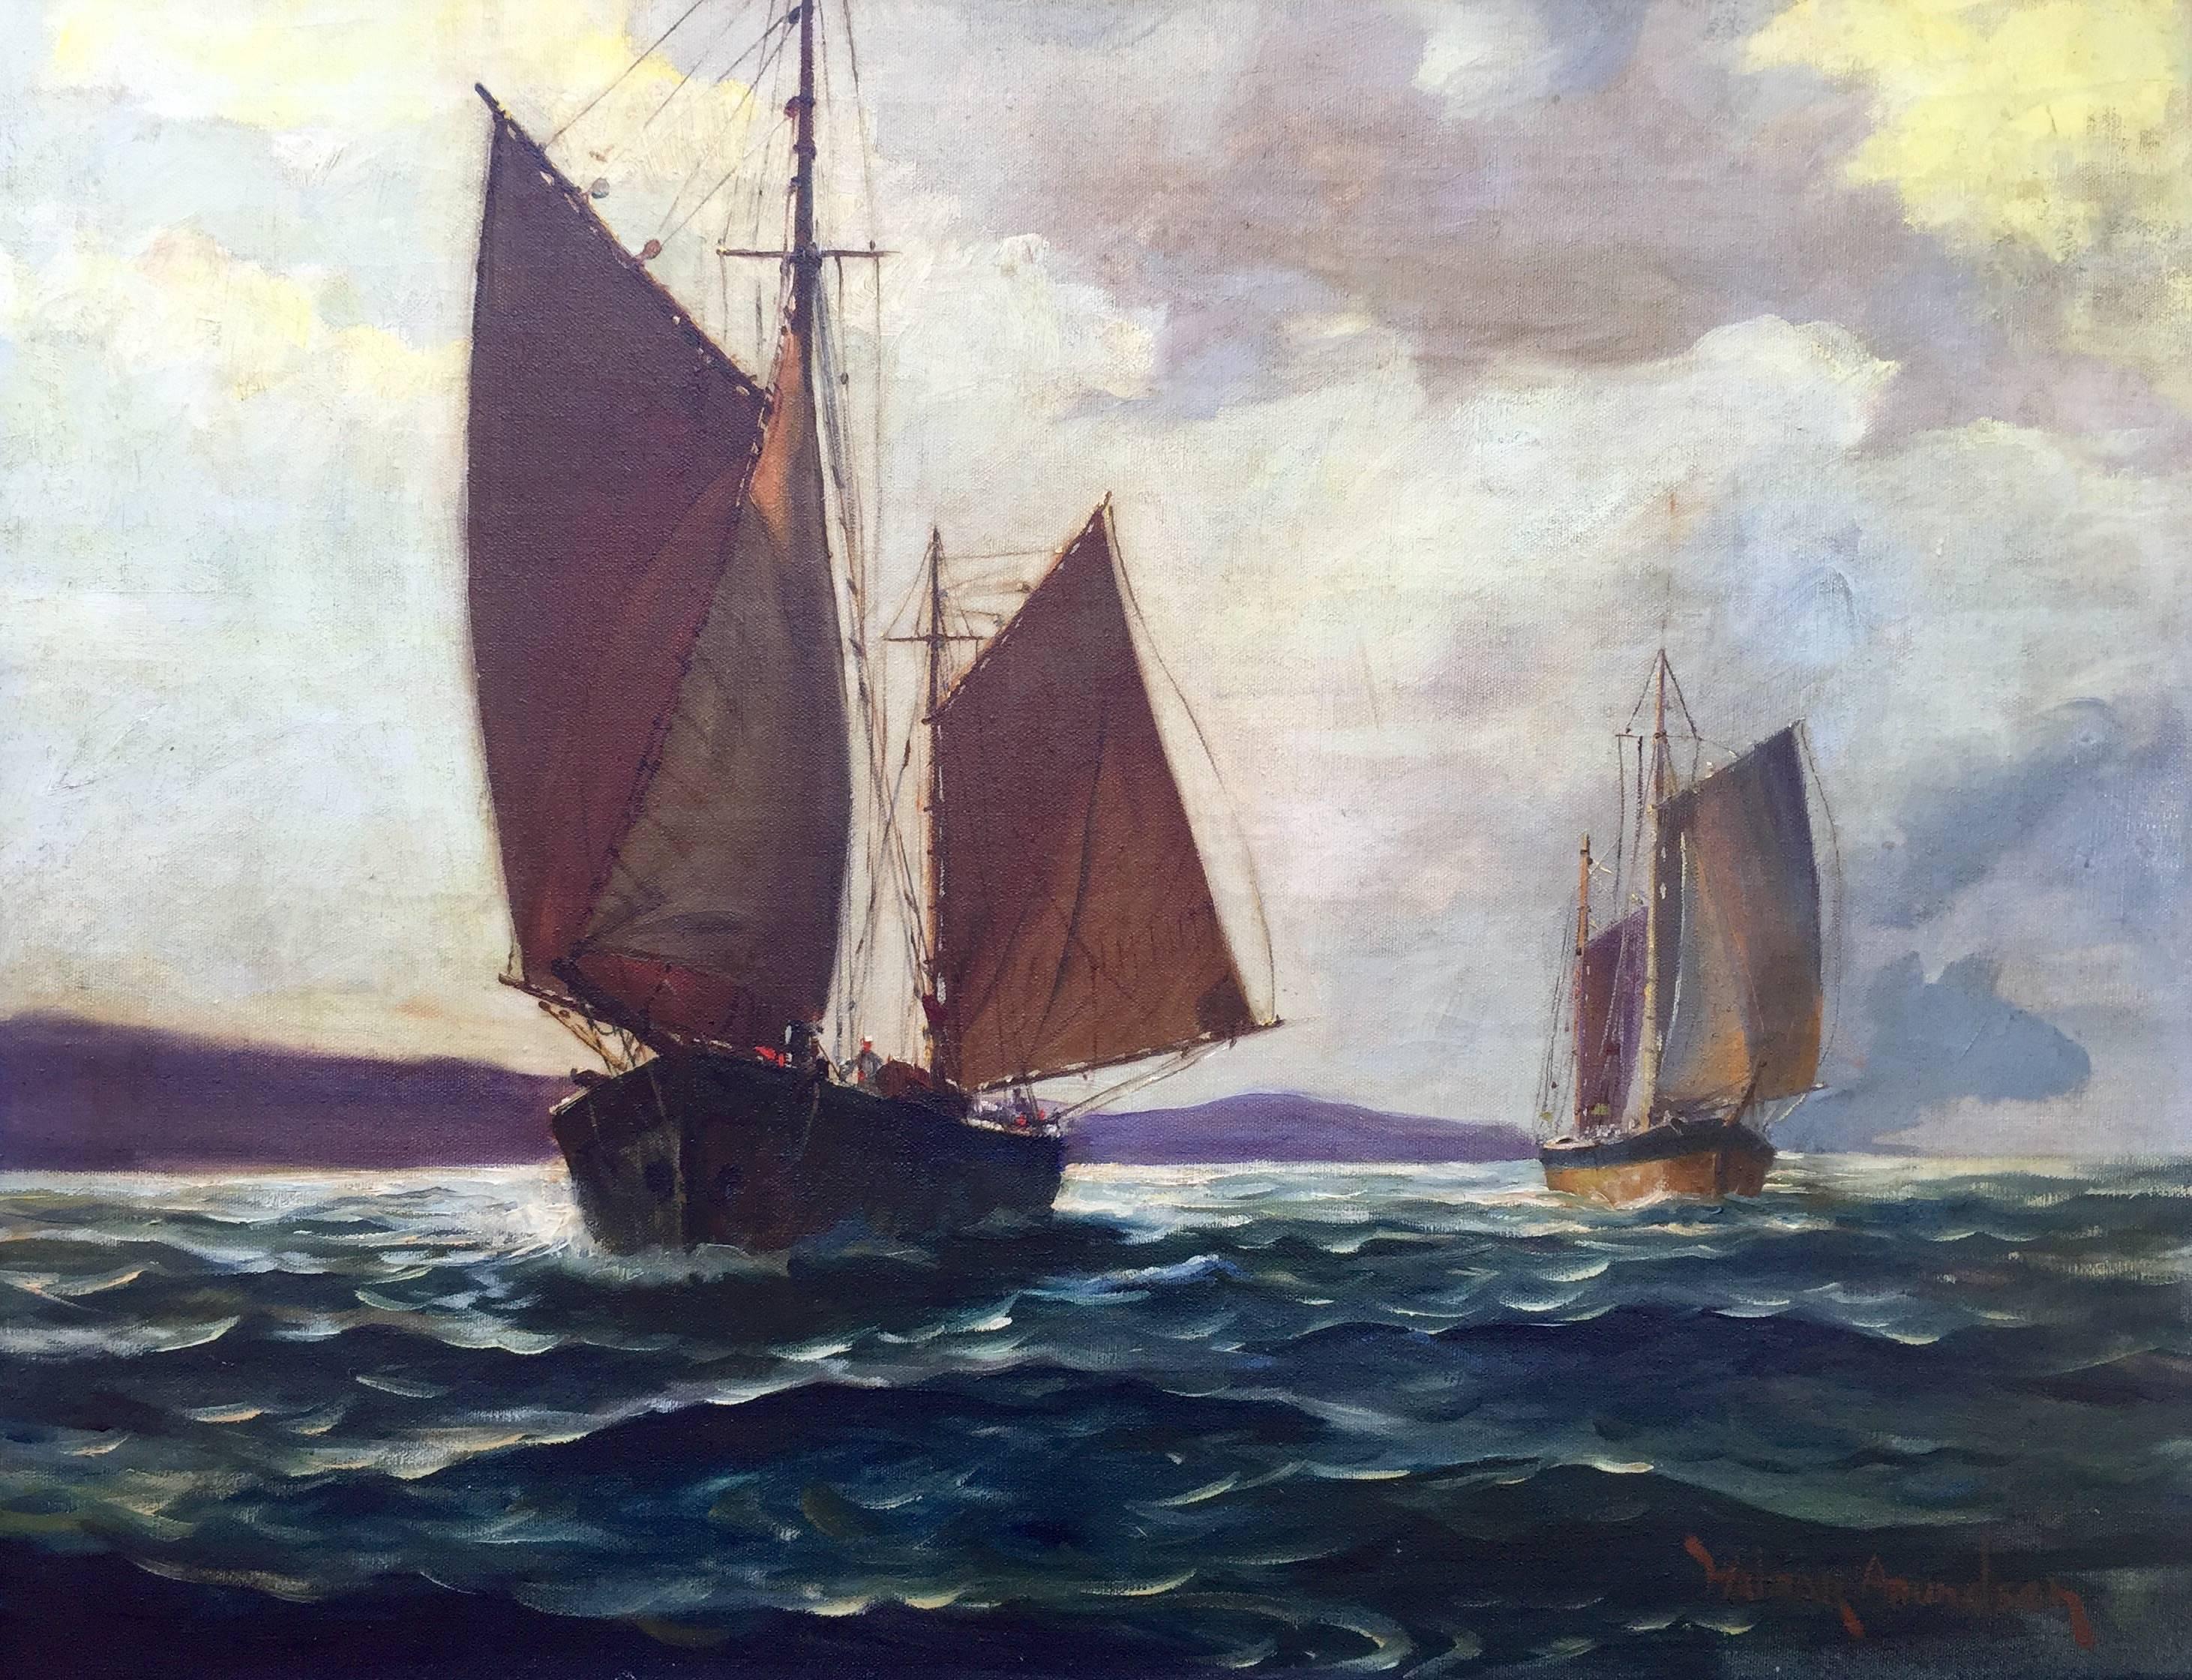 C. Hjalmar Amundsen Landscape Painting - "Coming Home"